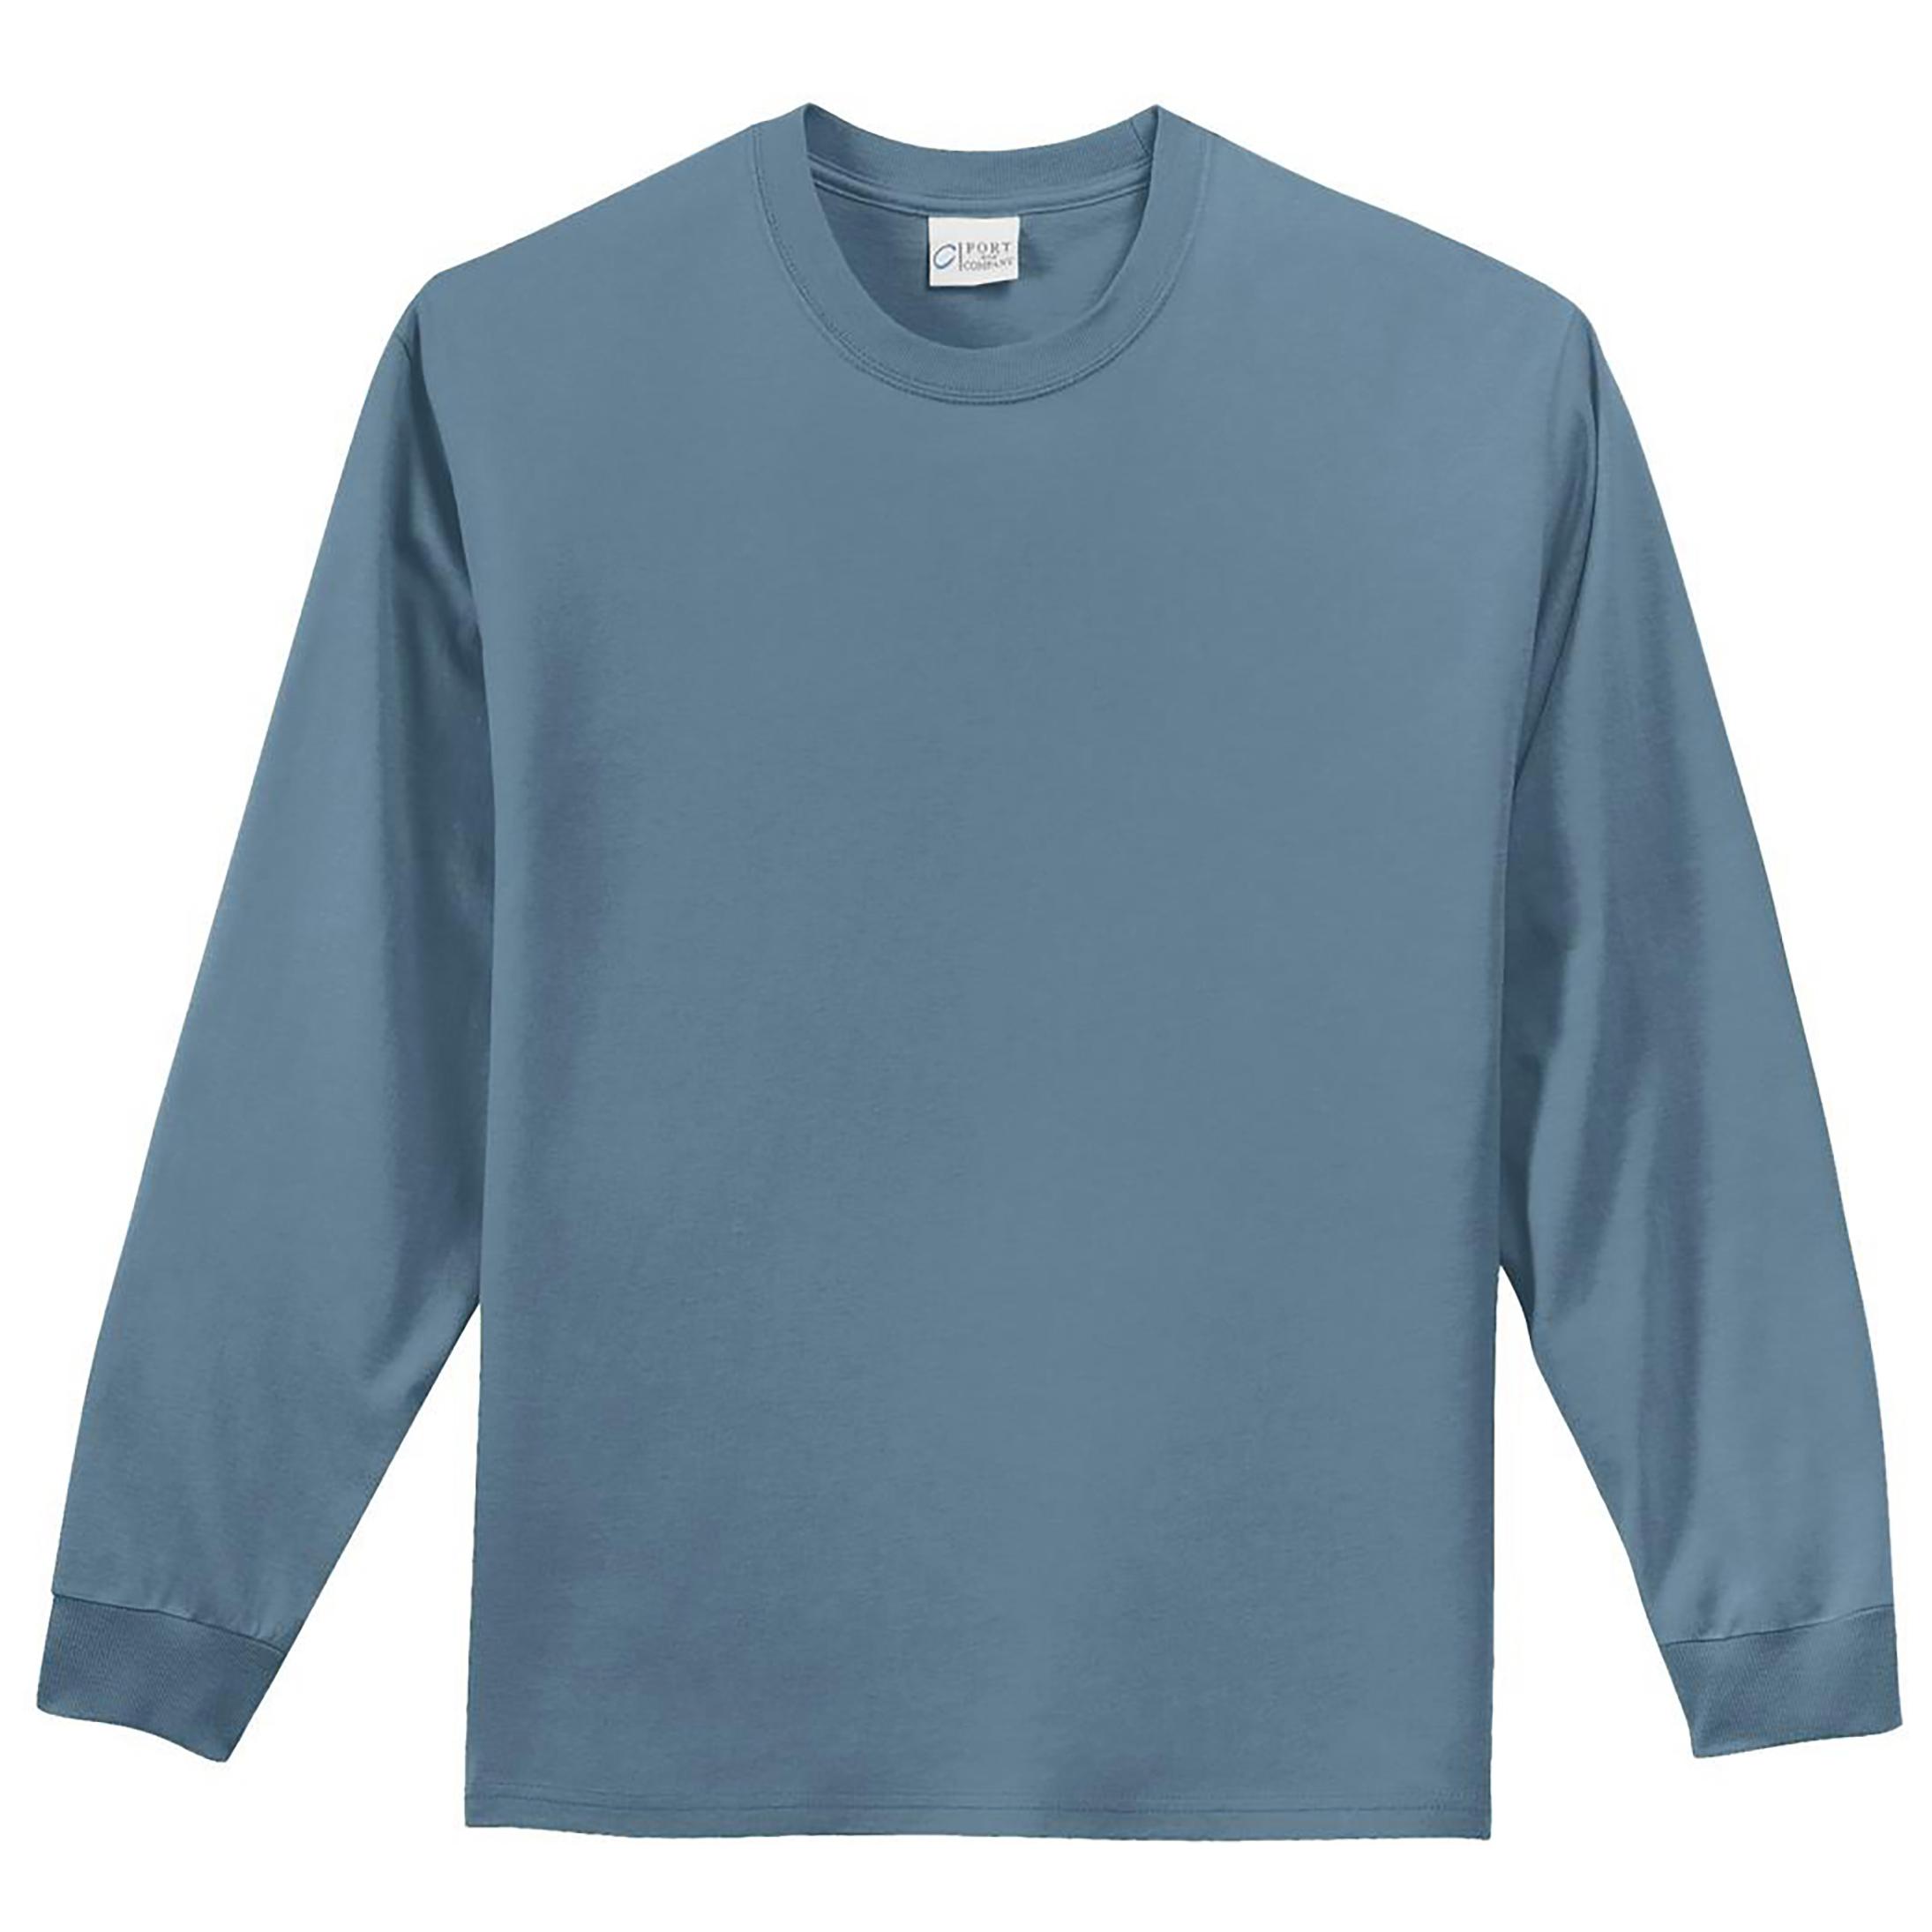 Port & Company Port & Co Adult male Men Electric Heather T-Shirt STONEWSH Blue Large Tall, Men's